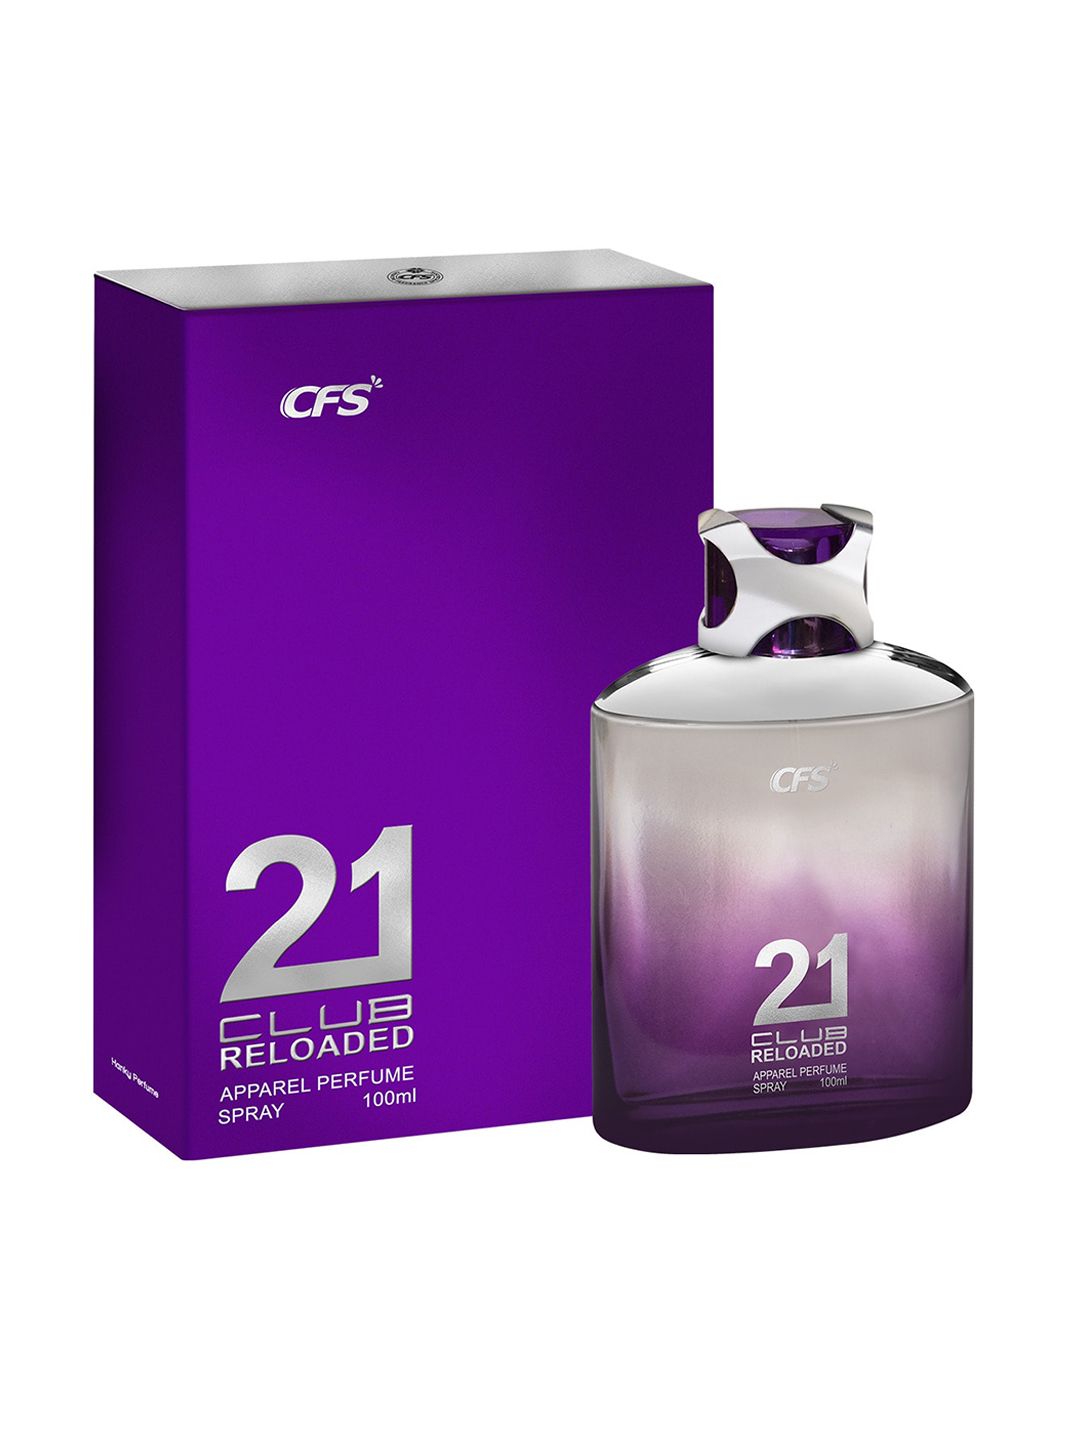 CFS 21 Club Reloaded Apparel Perfume Spray -100ml Price in India